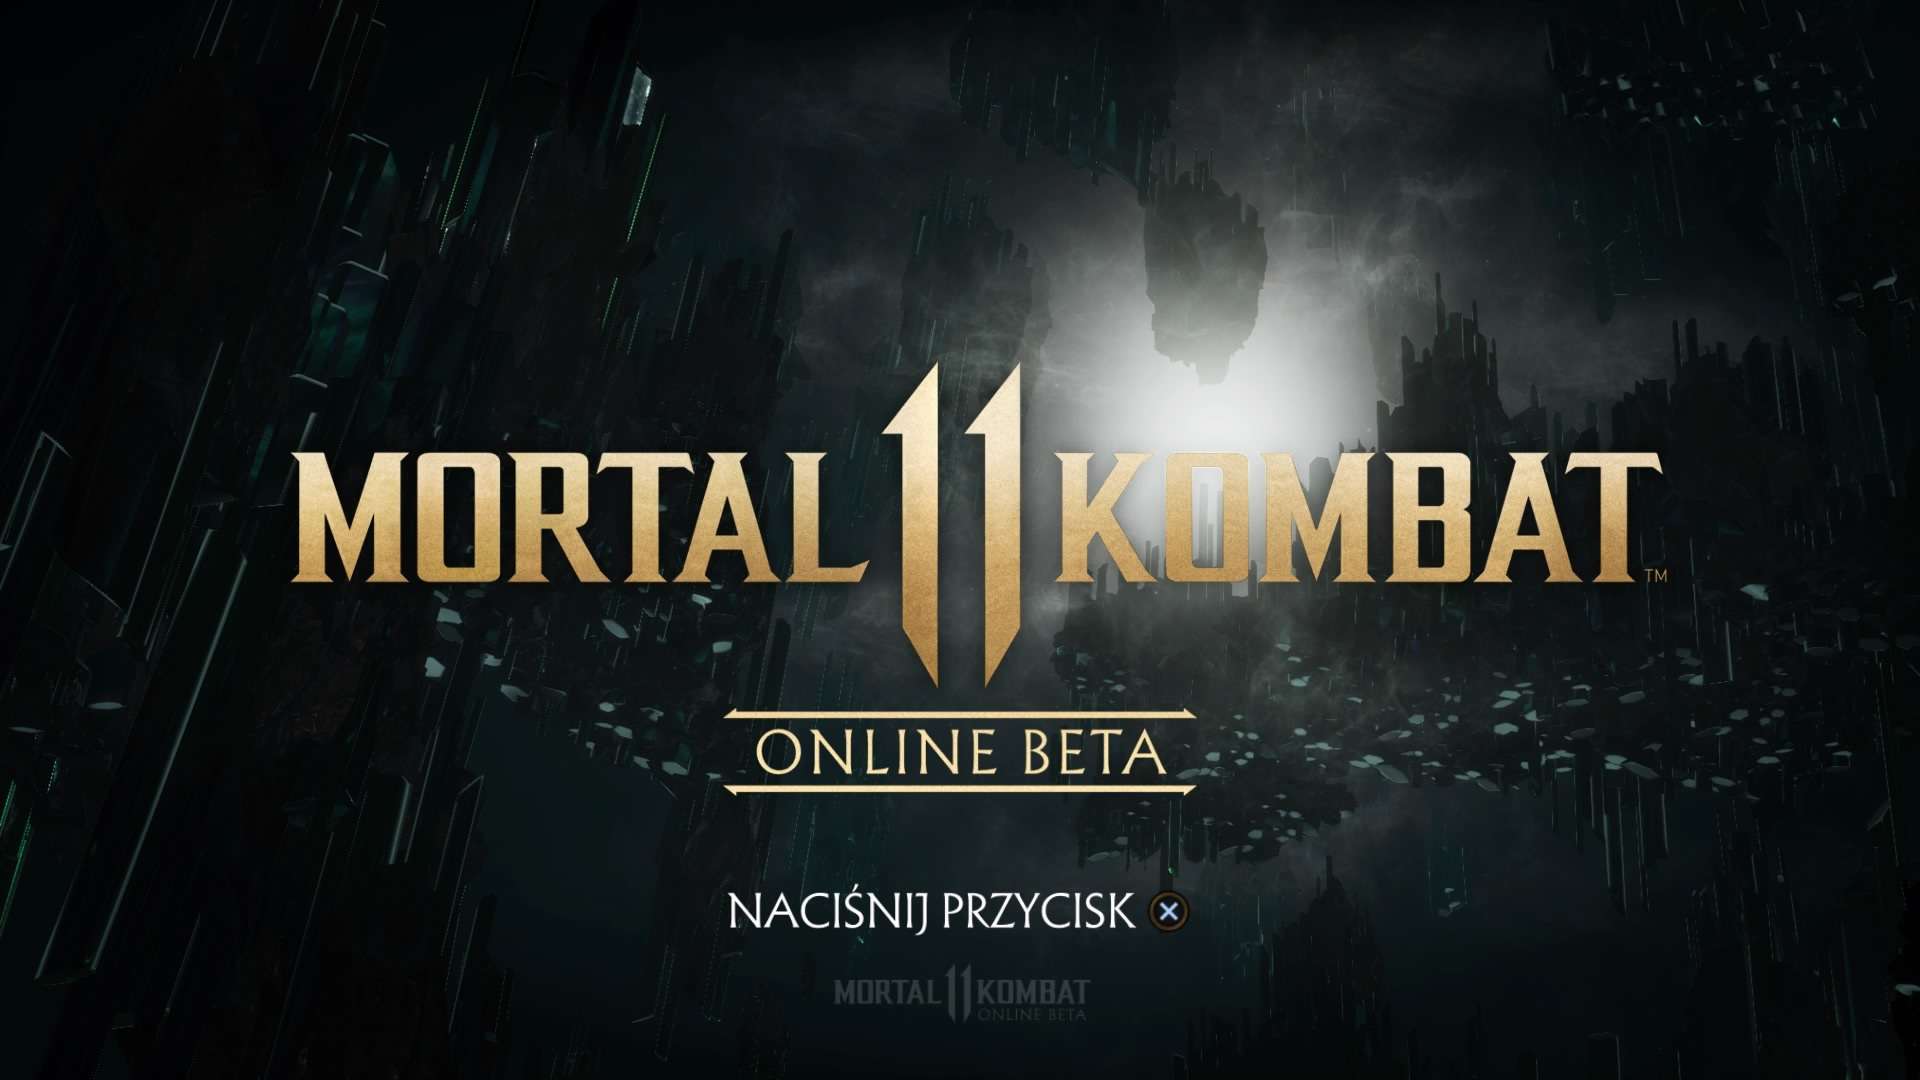 Mortal Kombat 11 Online BETA - moje wrażenia